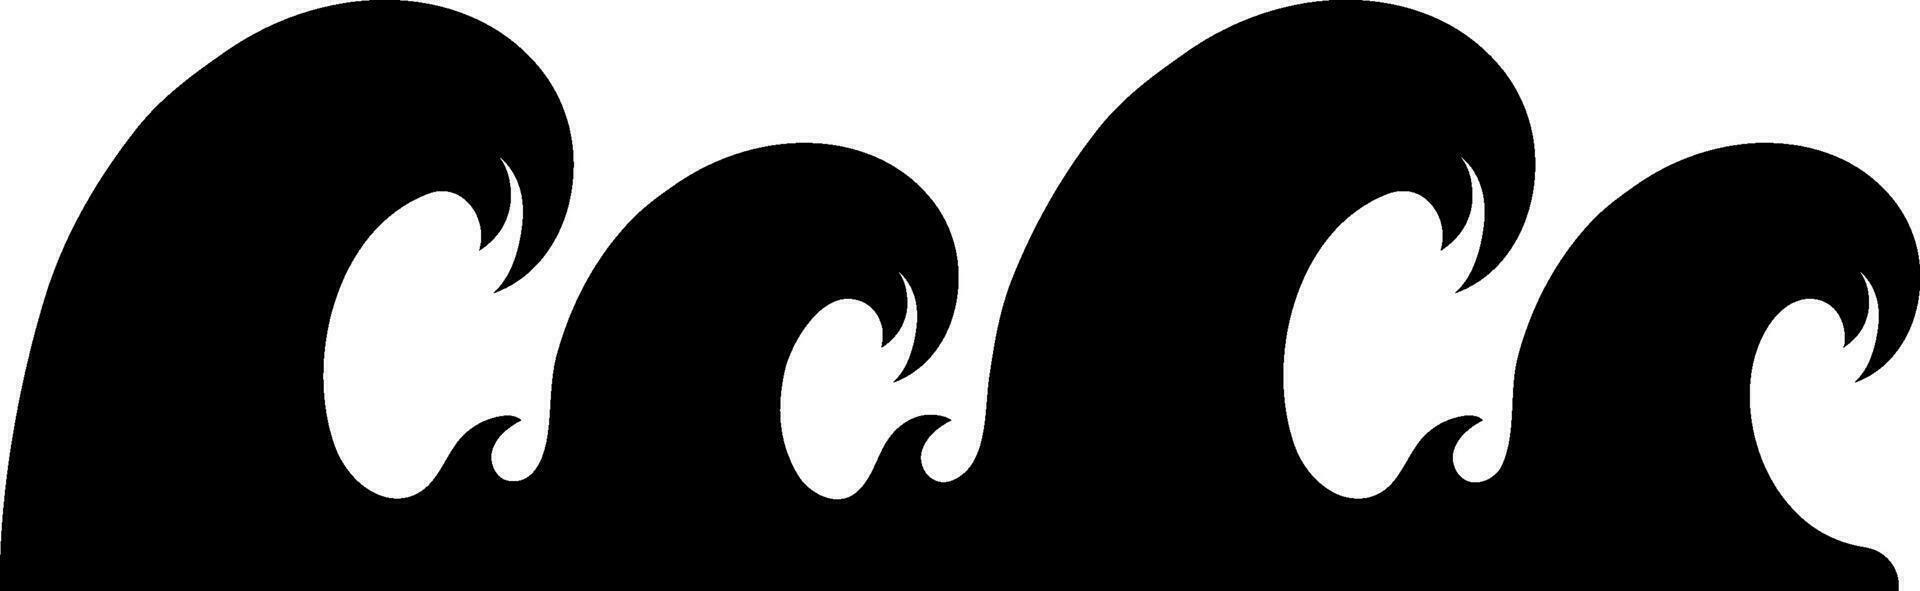 Glyph tsunami icon or symbol. vector